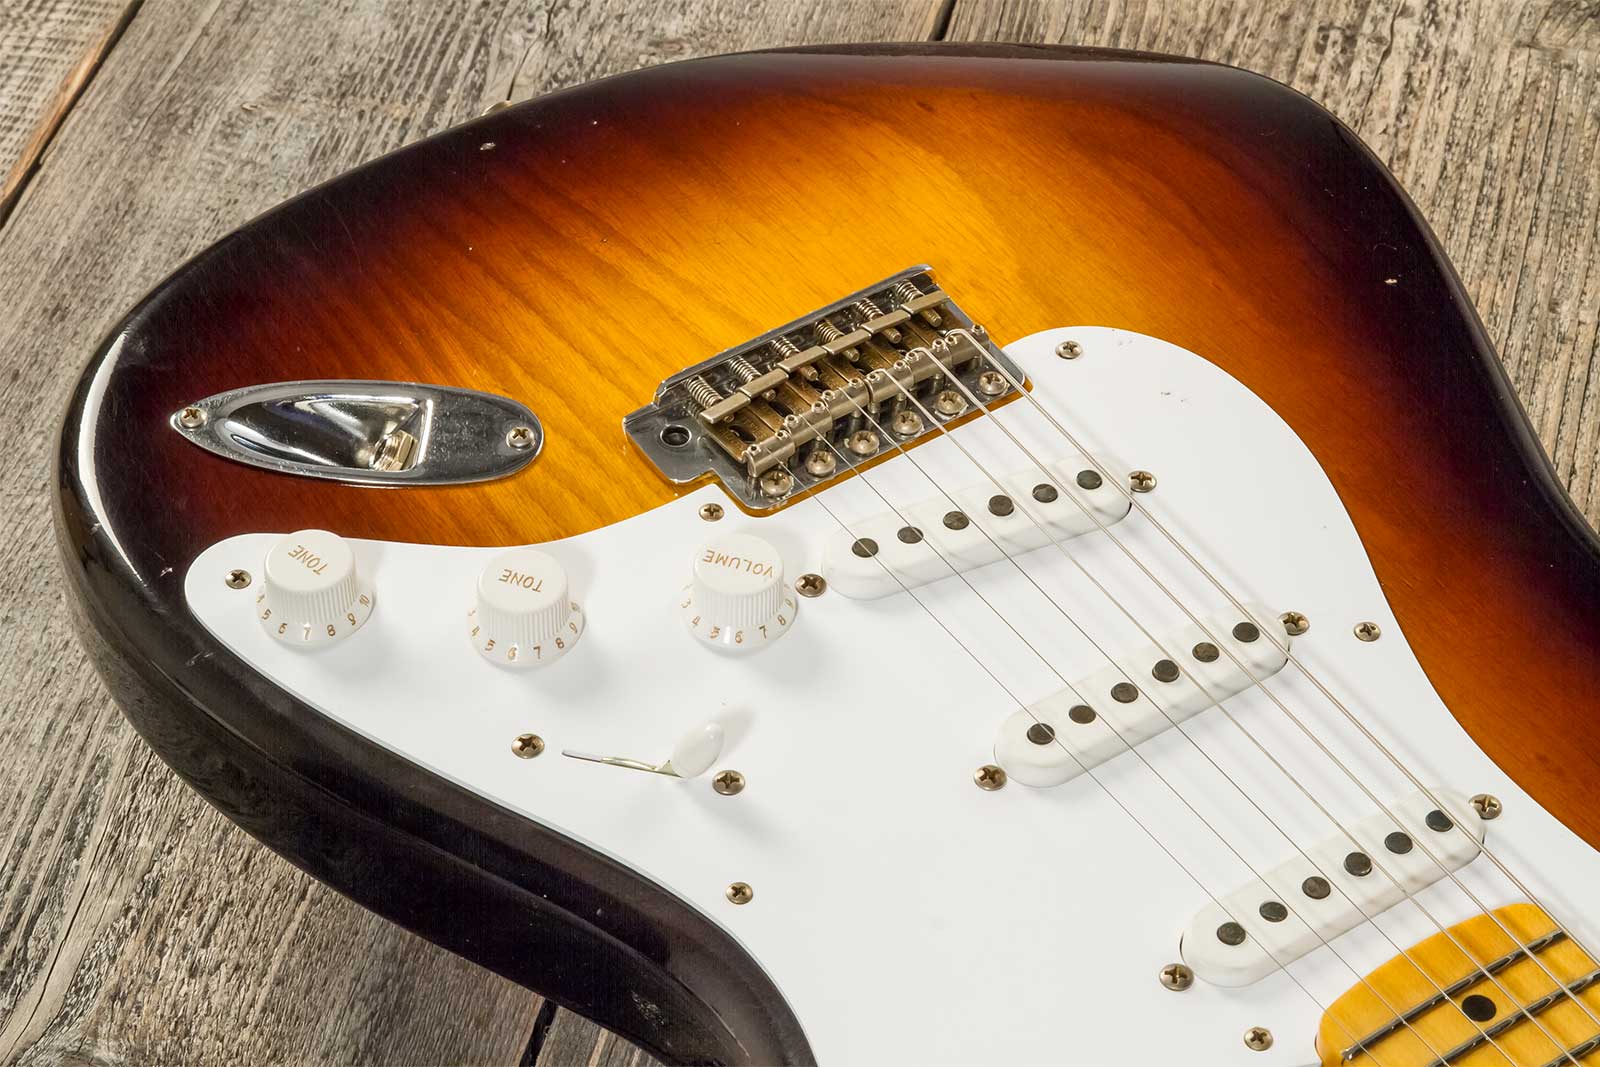 Fender Custom Shop Strat 1954 70th Anniv. 3s Trem Mn #xn4193 - Journeyman Relic Wide-fade 2-color Sunburst - Elektrische gitaar in Str-vorm - Variatio